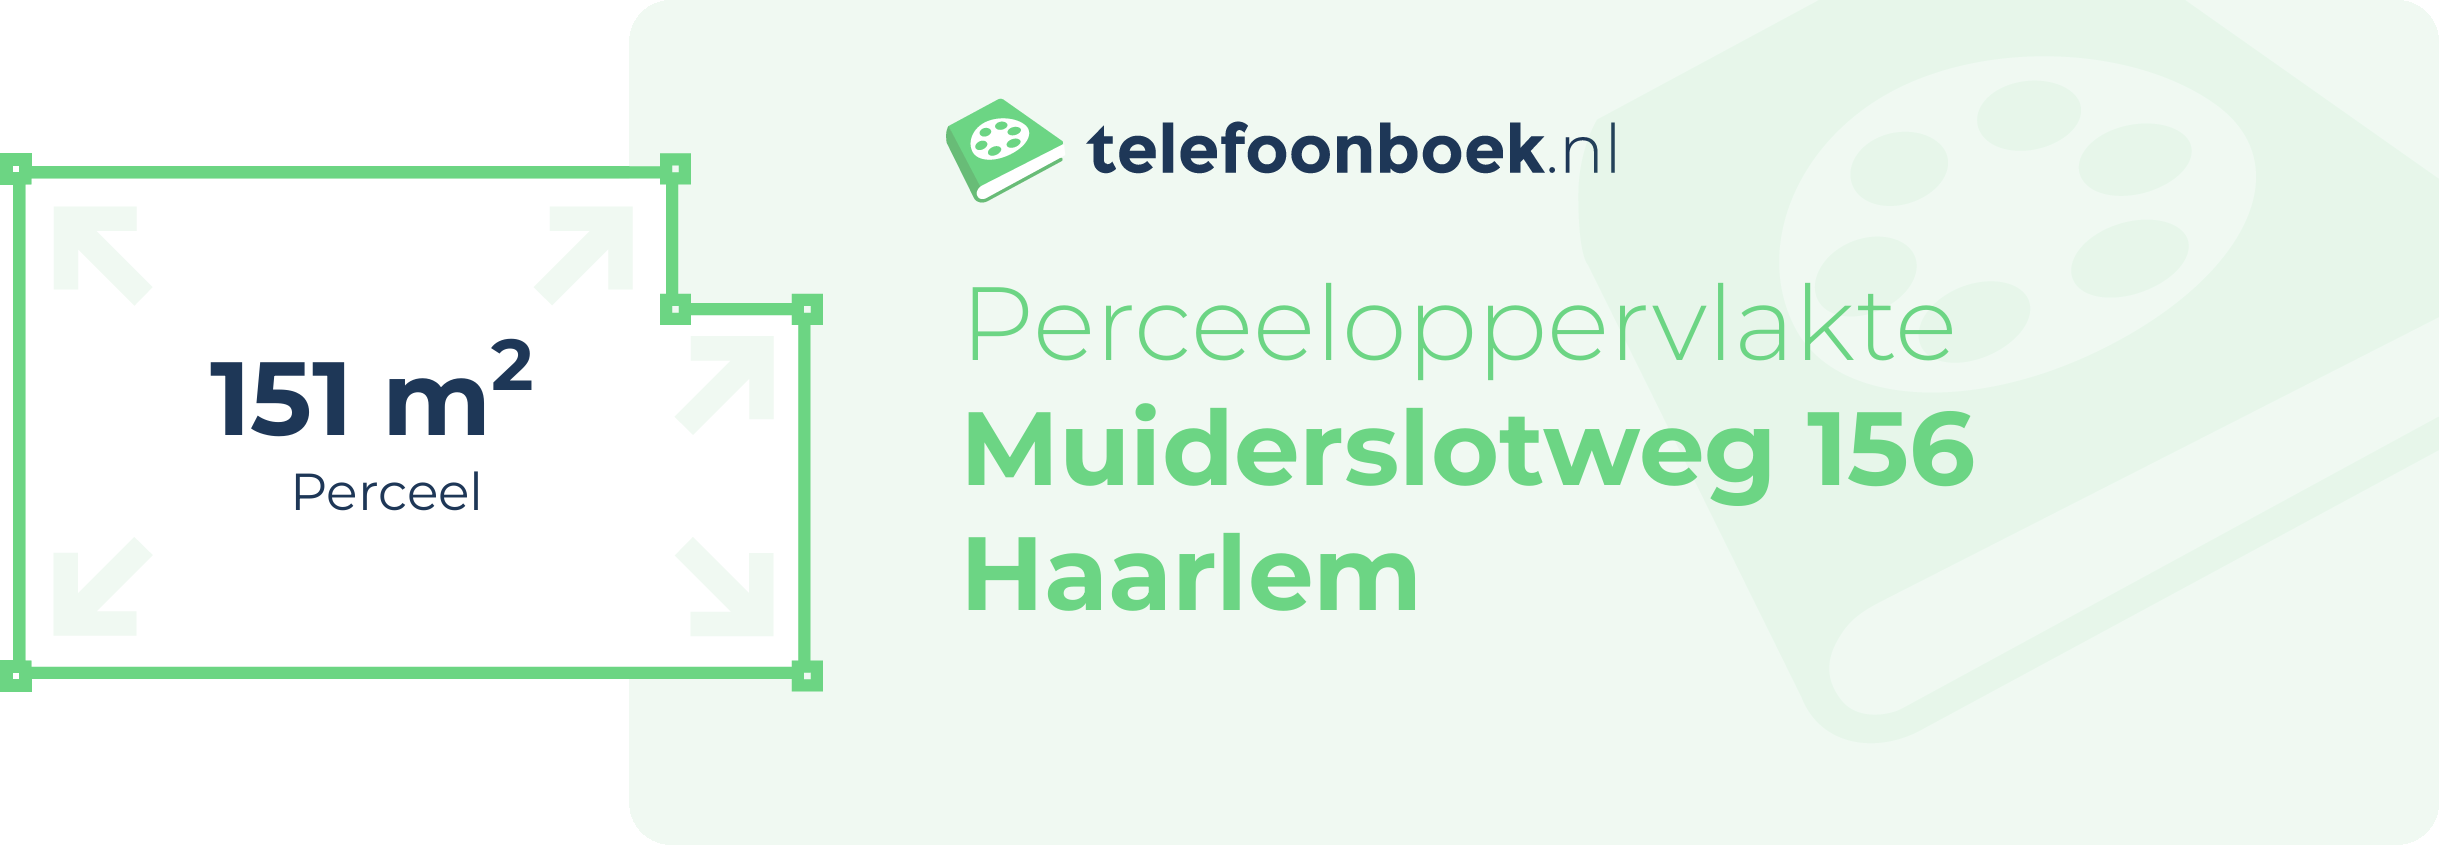 Perceeloppervlakte Muiderslotweg 156 Haarlem